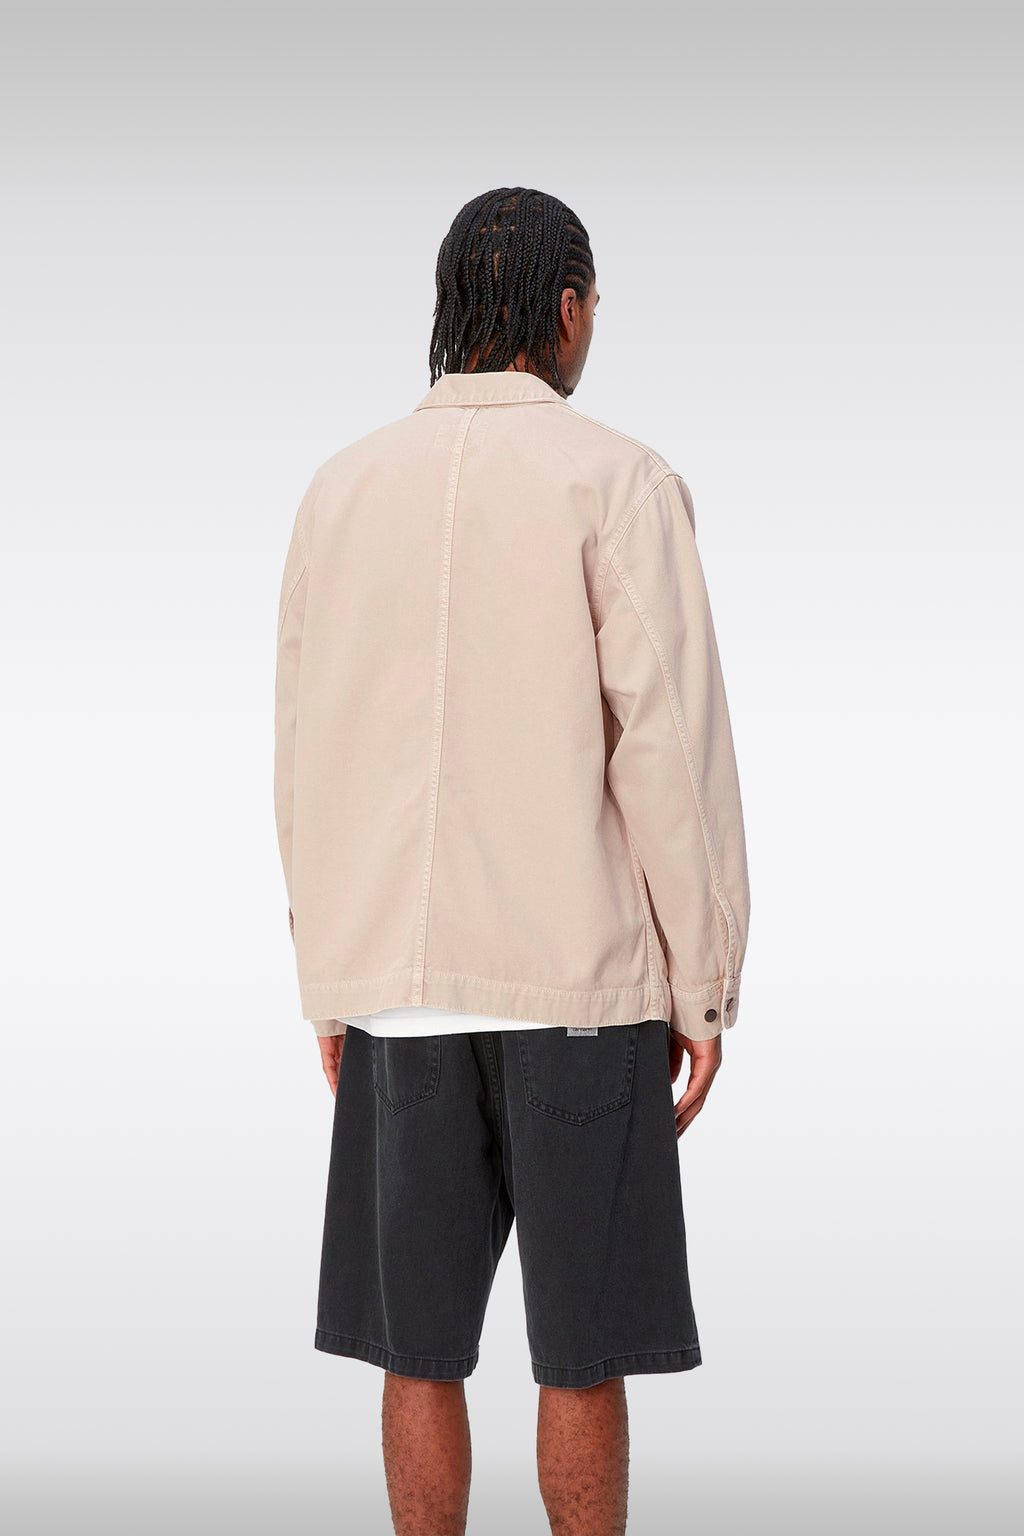 alt-image__Beige-cotton-twill-work-jacket-with-patch-pockets---Garrison-Coat